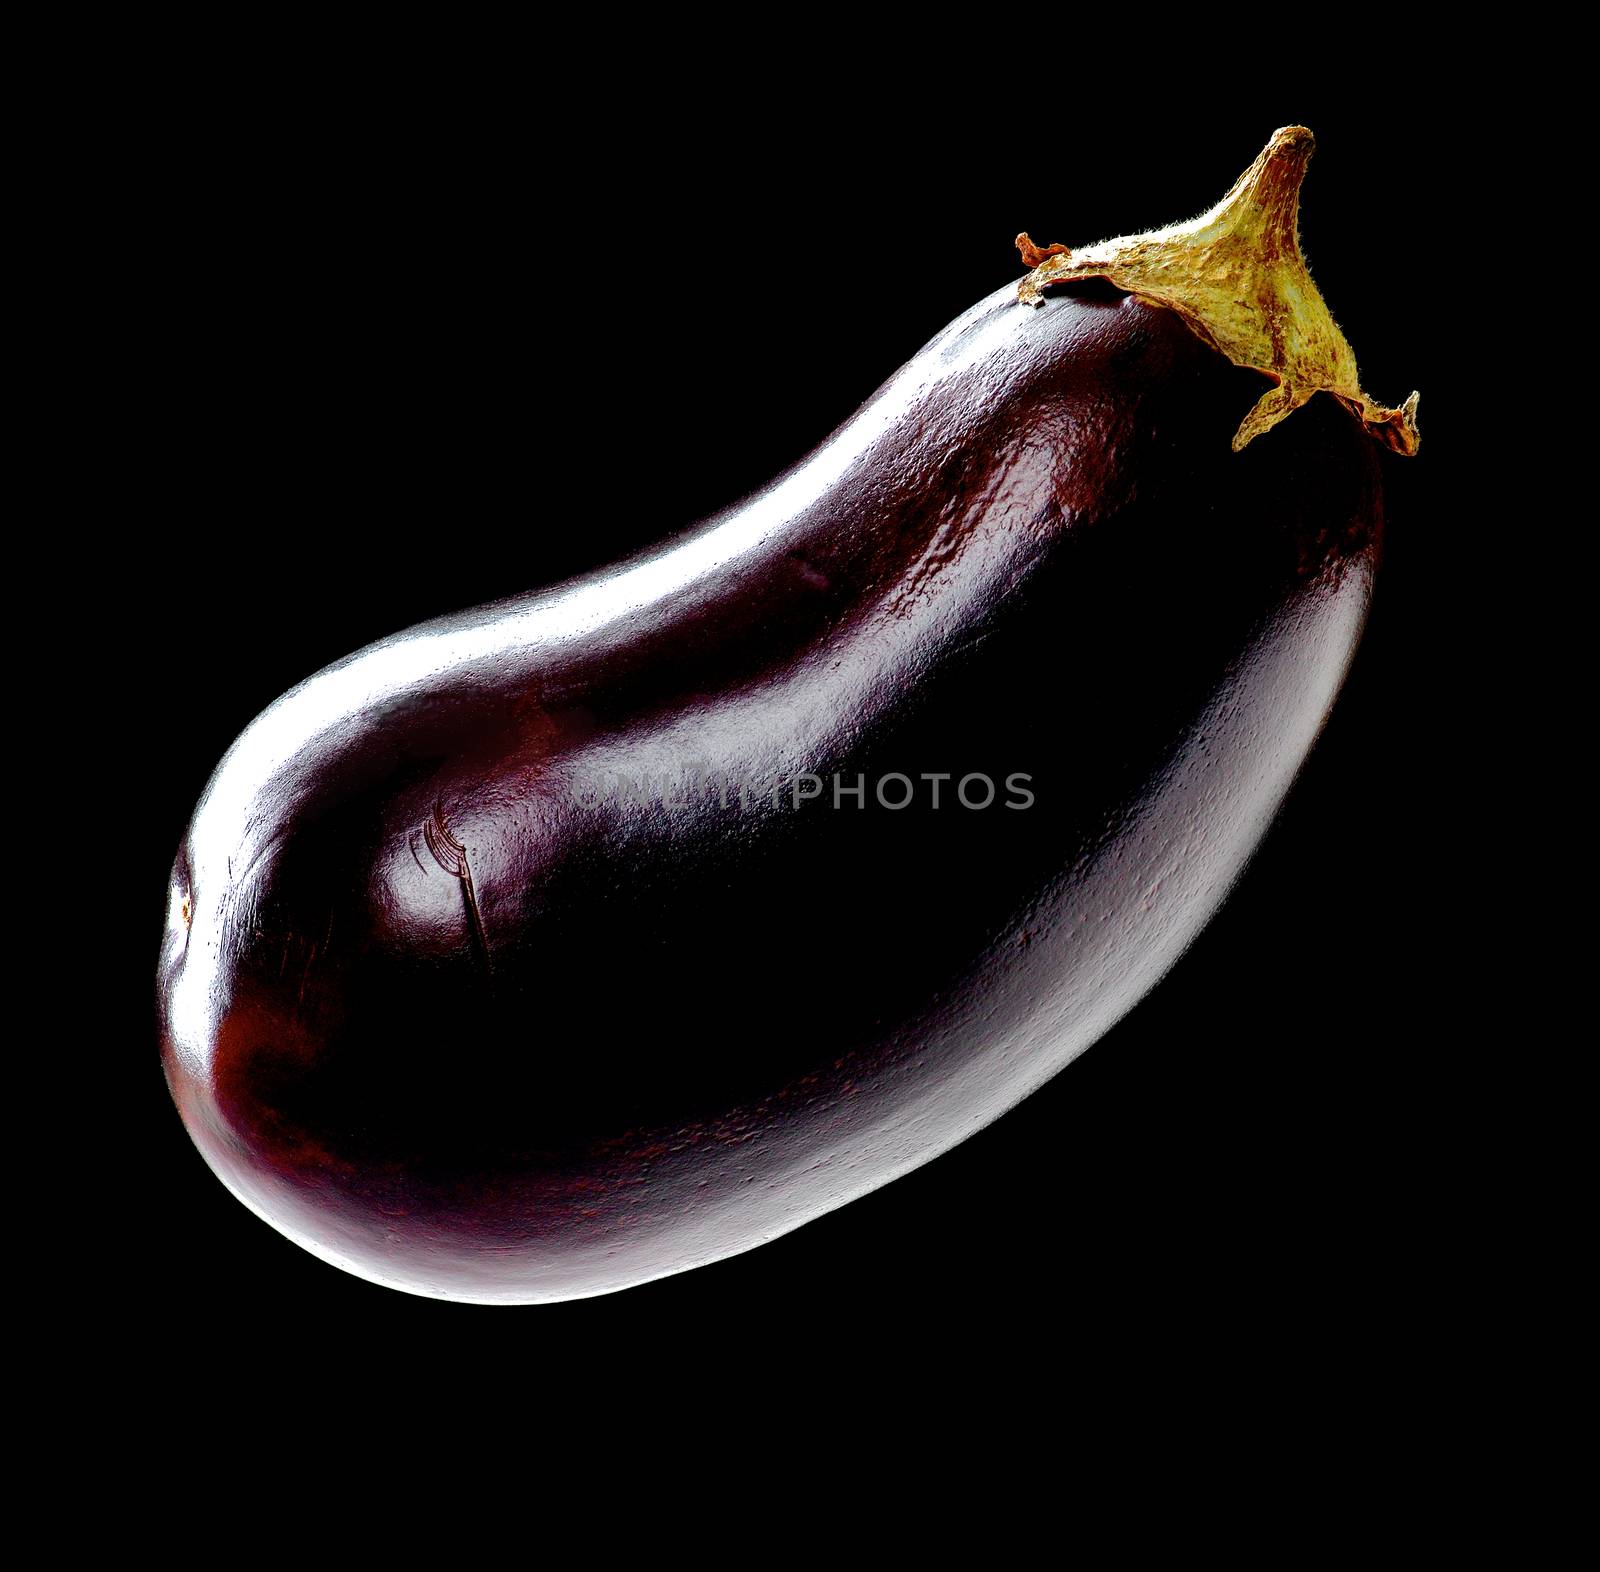 Eggplant in Shadow by zhekos